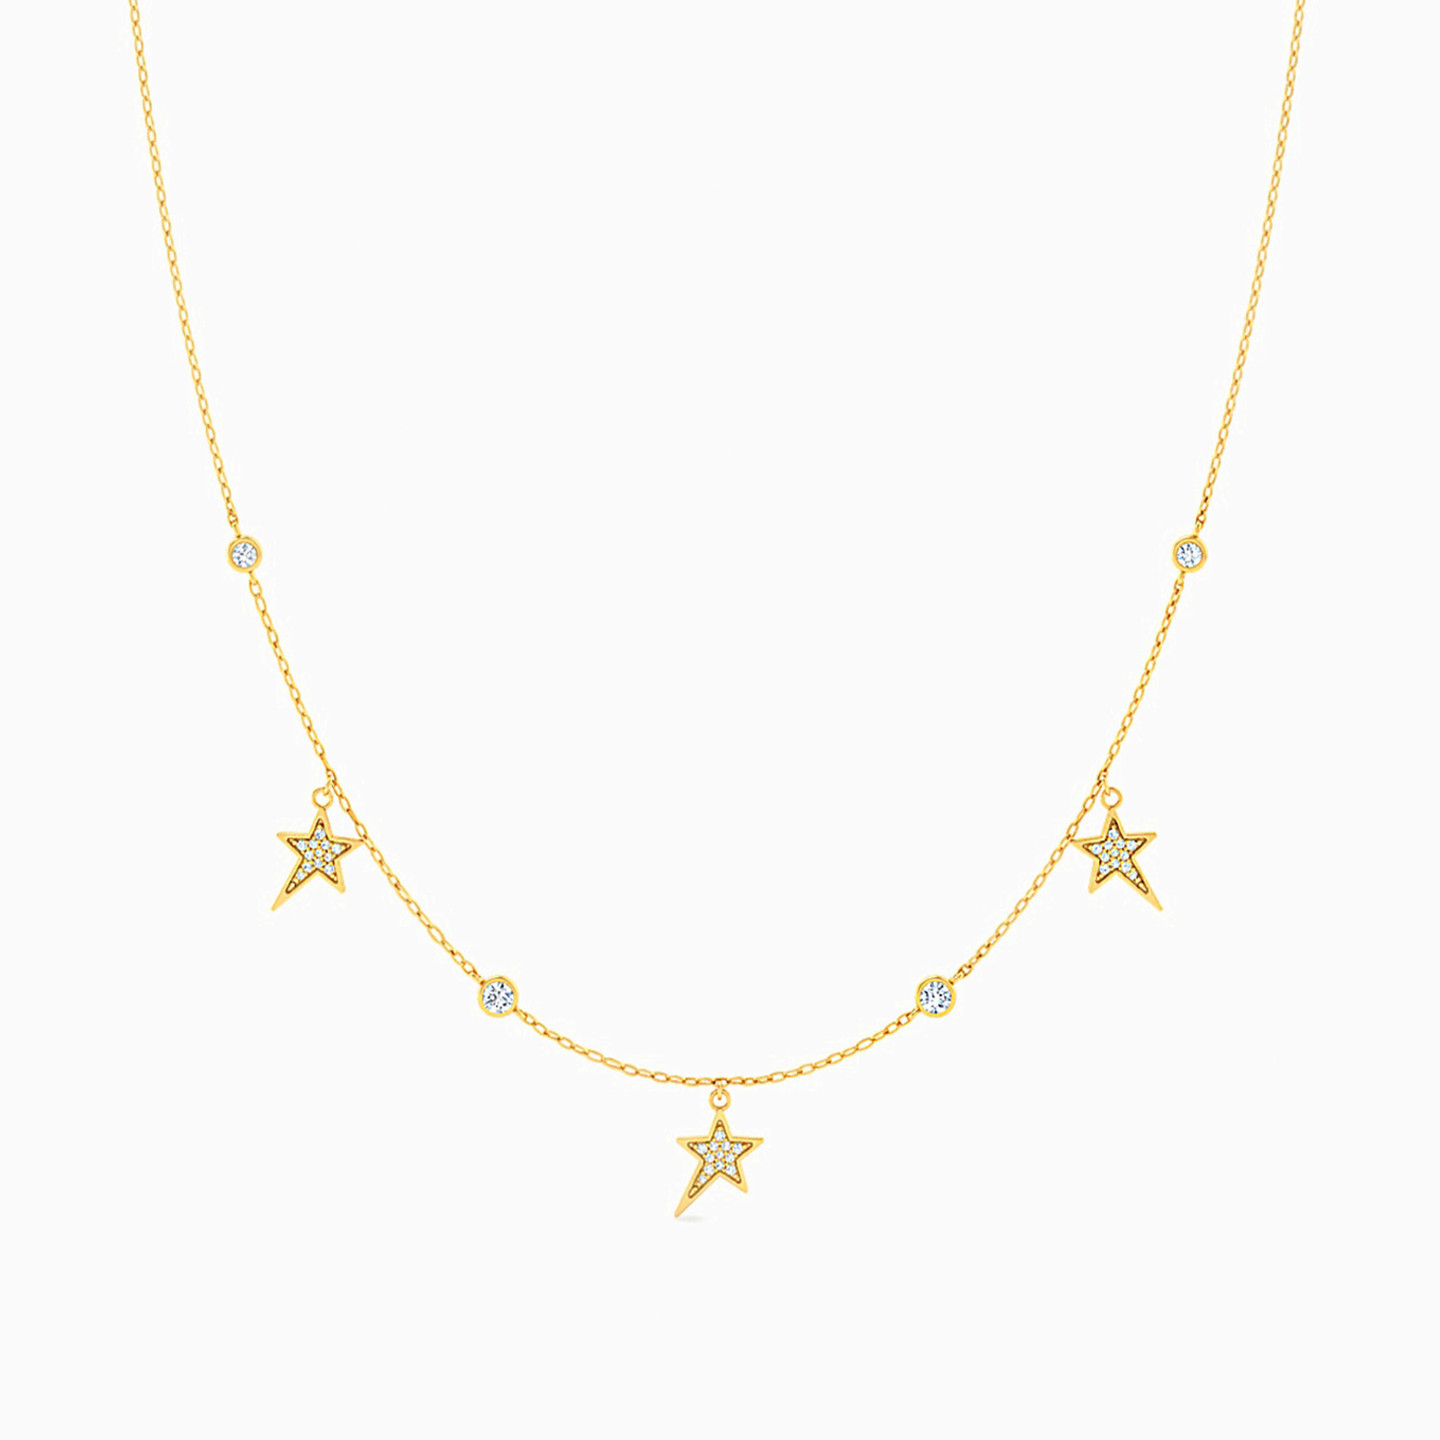 18K Gold Diamond Chain Necklace - 3